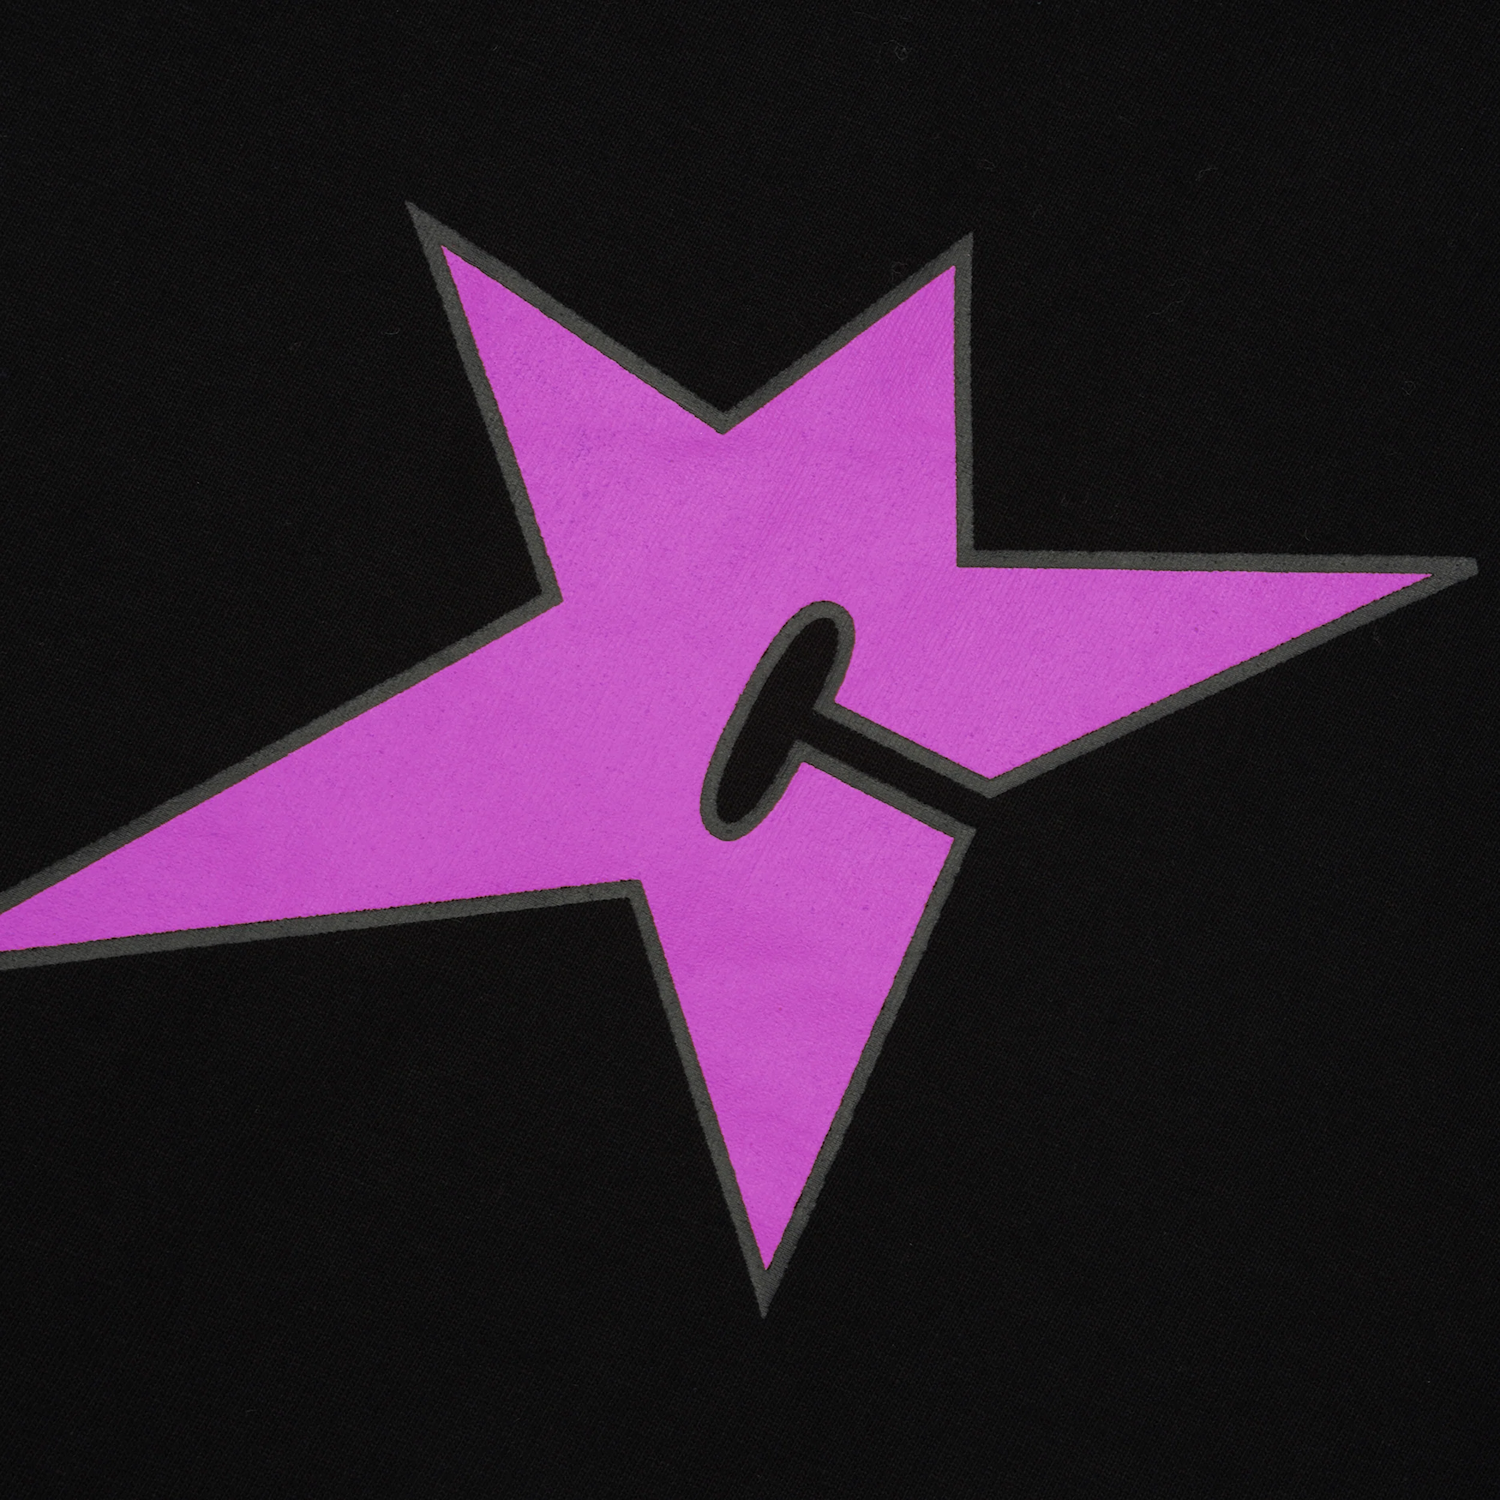 C-Star Logo Tee, Black